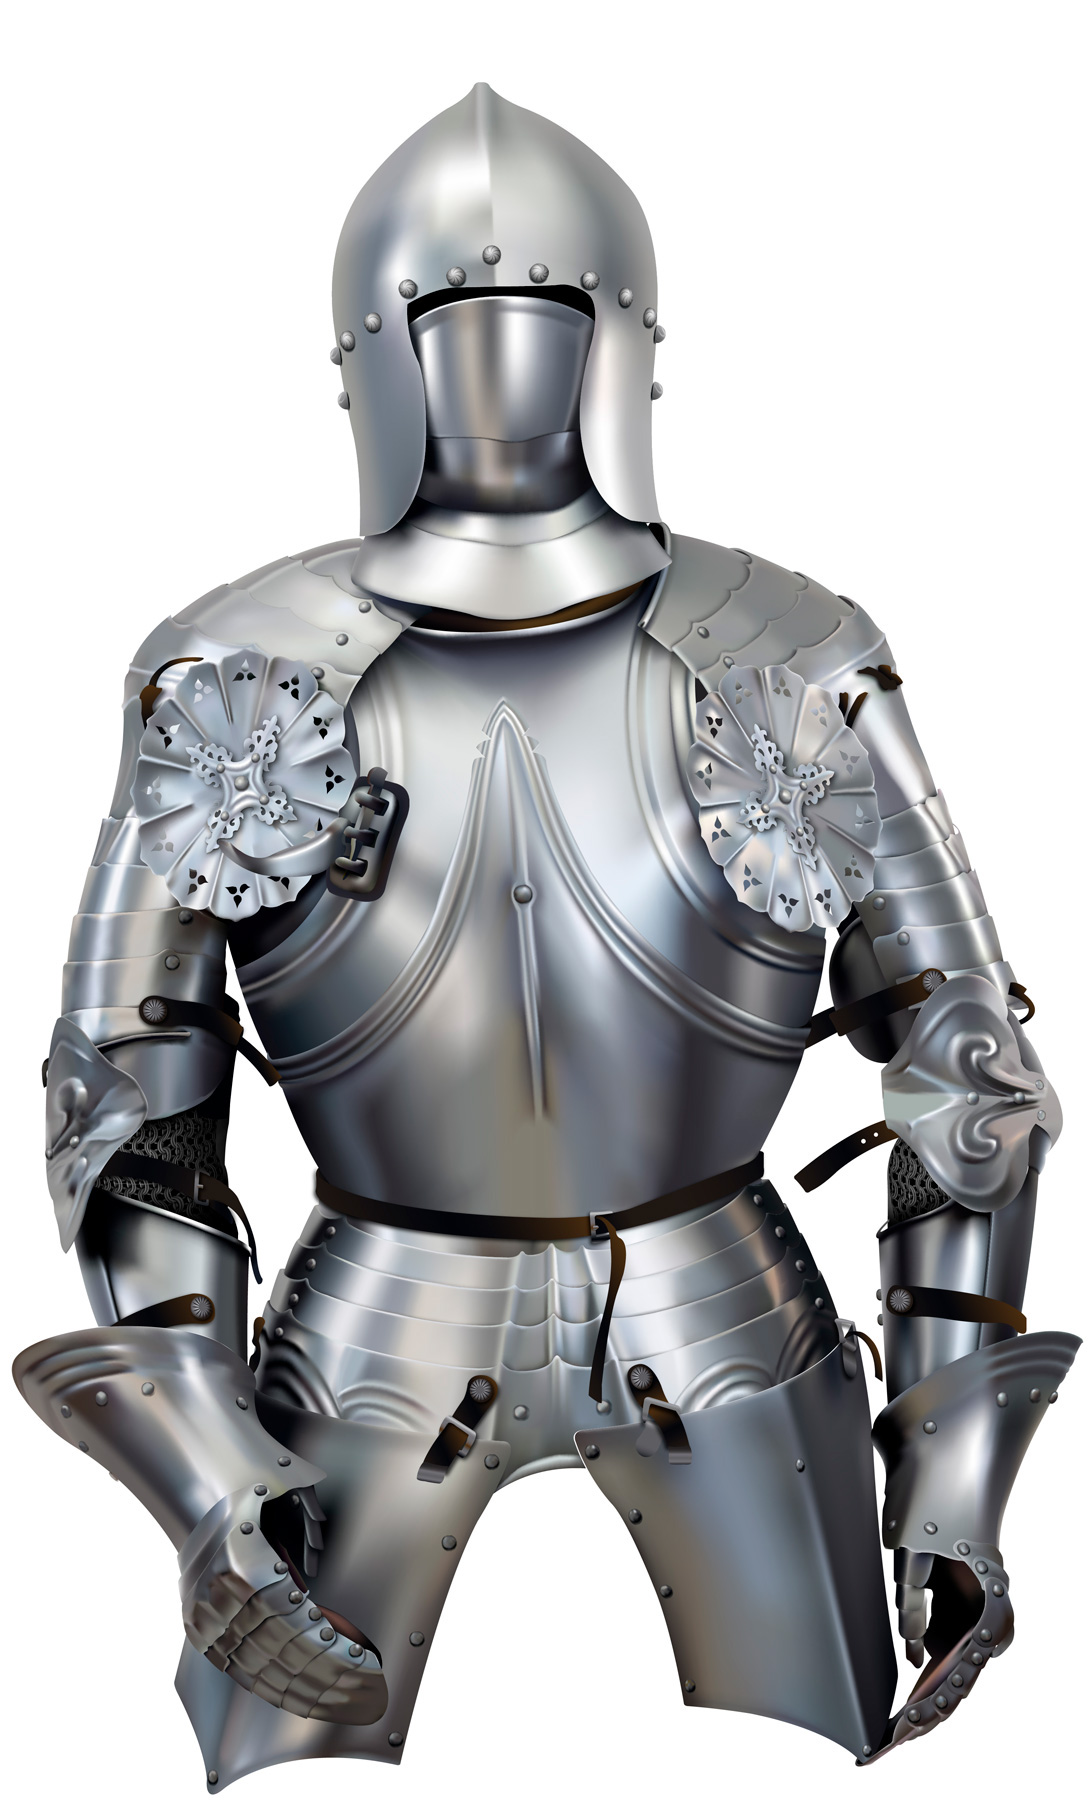 armor illustration free download